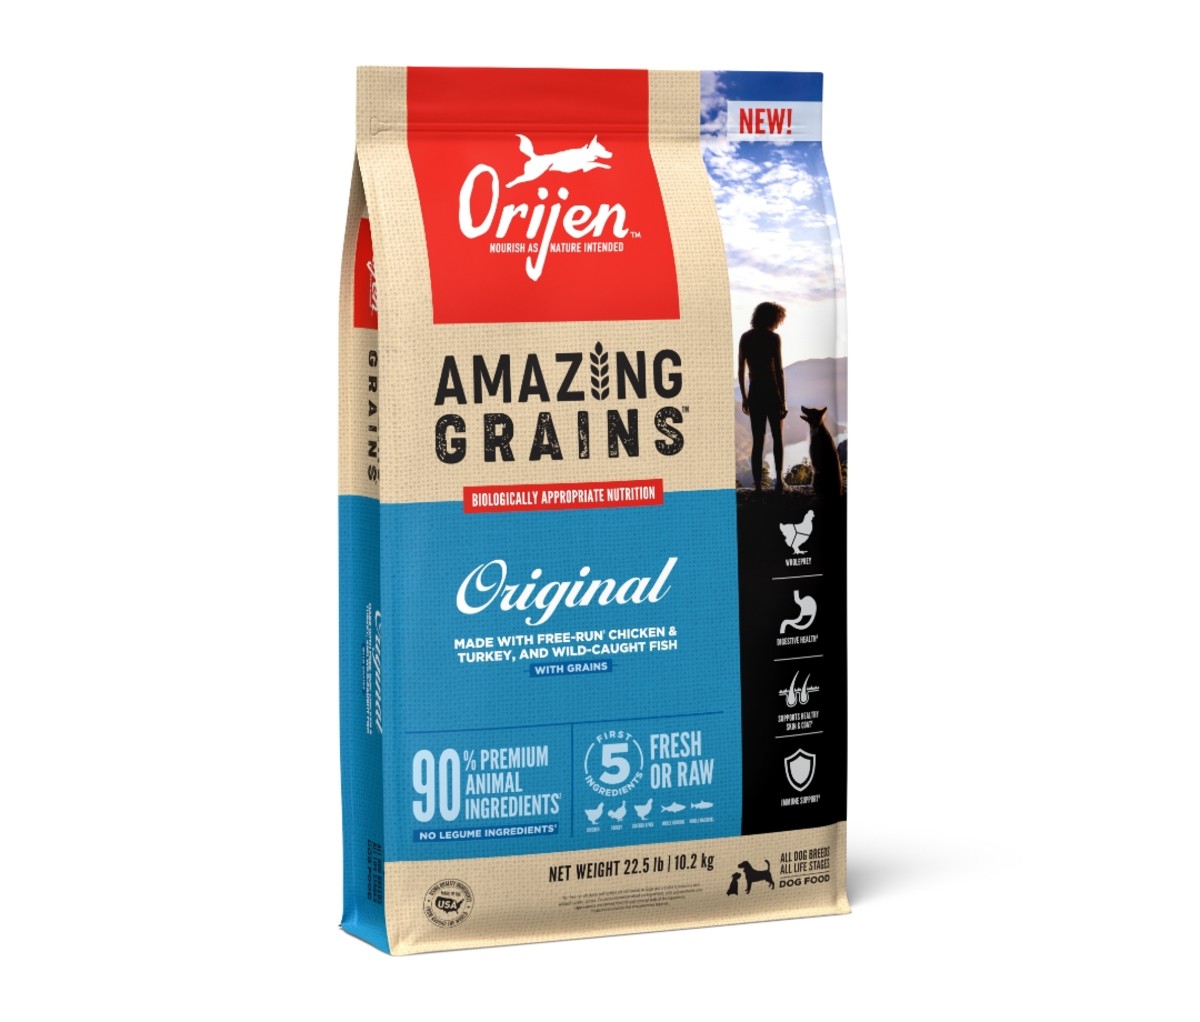 Orijen Amazing Grains Pet Food on a white background.